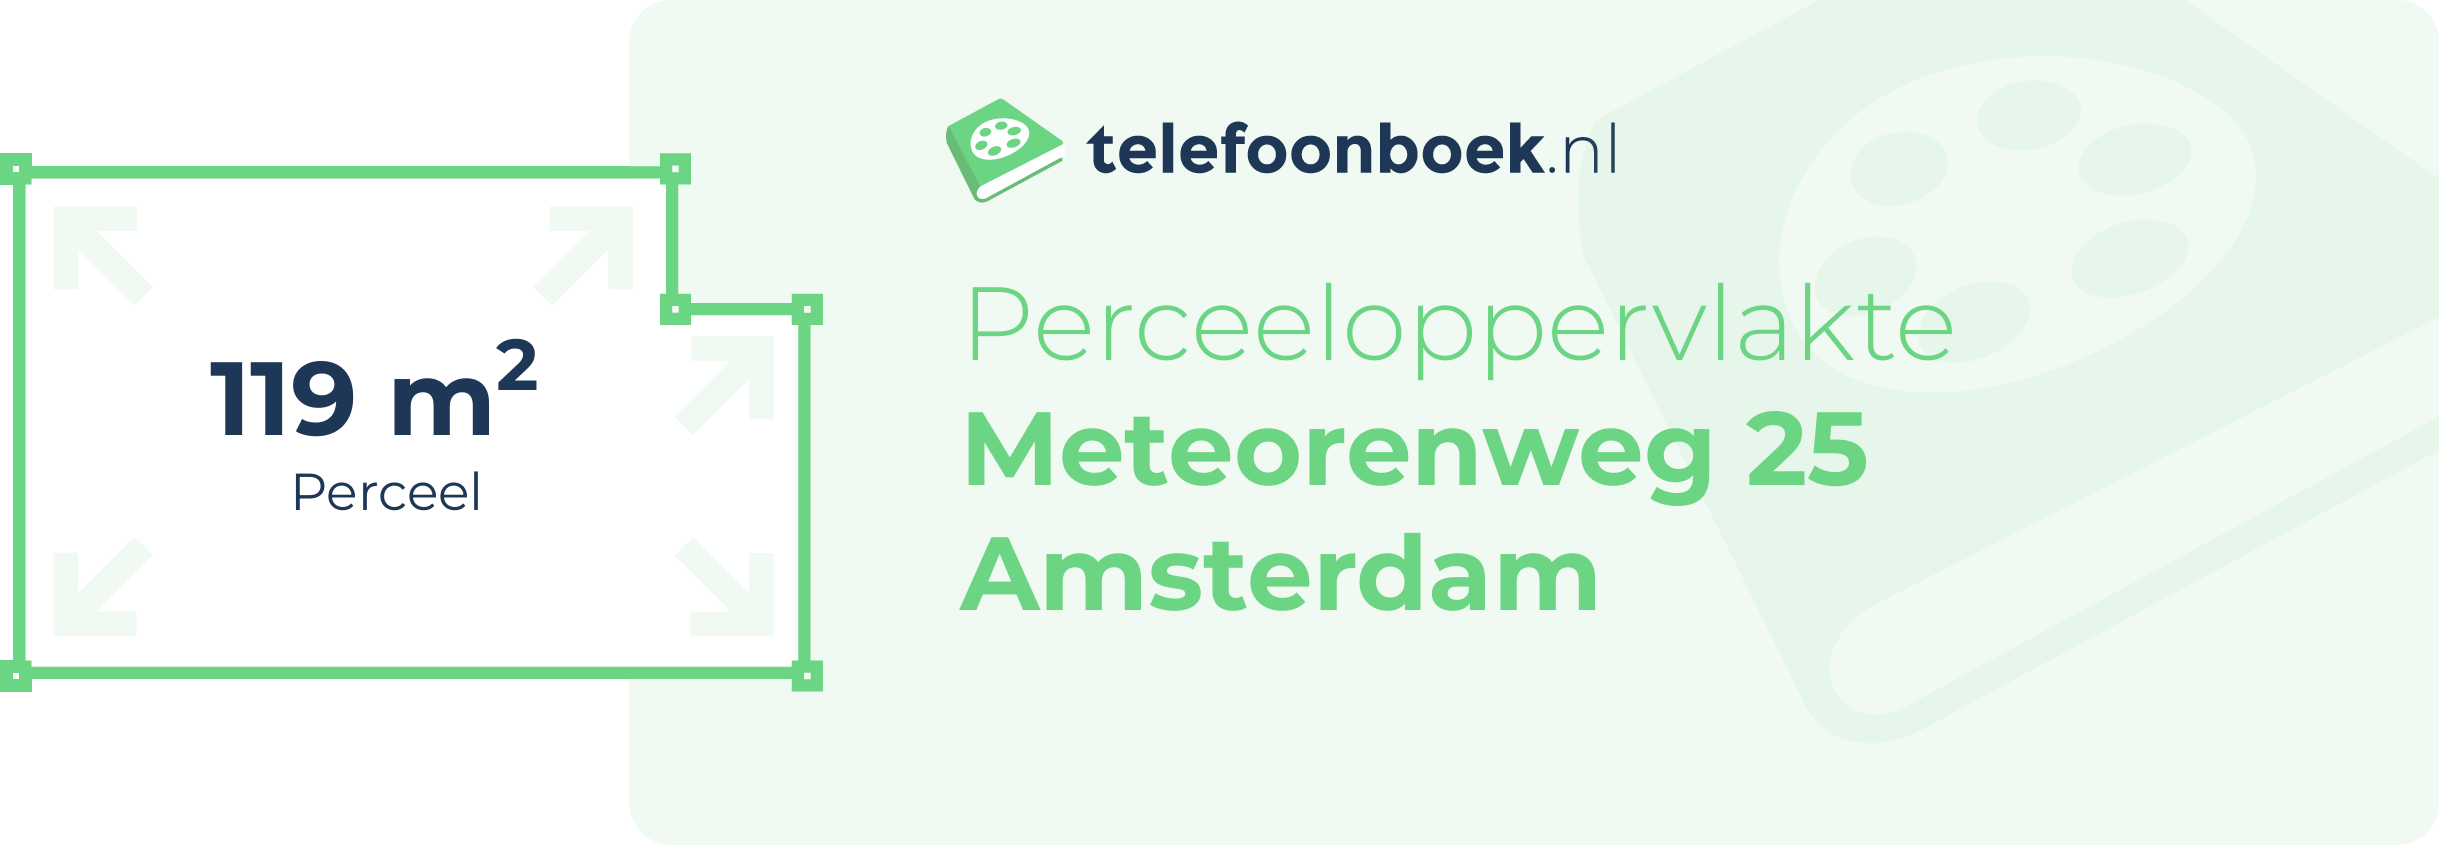 Perceeloppervlakte Meteorenweg 25 Amsterdam